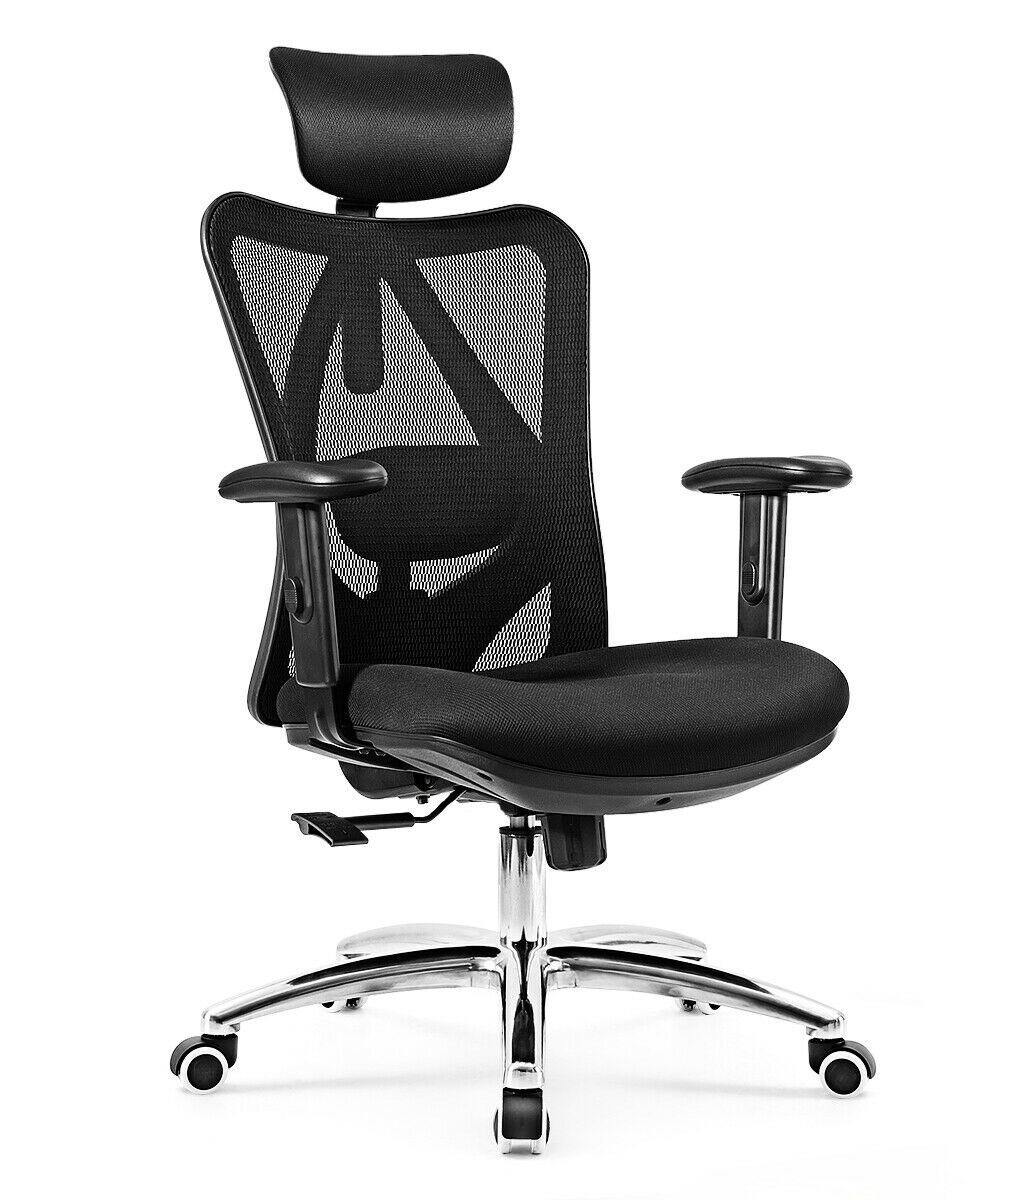 High Back Mesh Office Chair Adjustable Lumbar Support&Headrest Home Study Black 